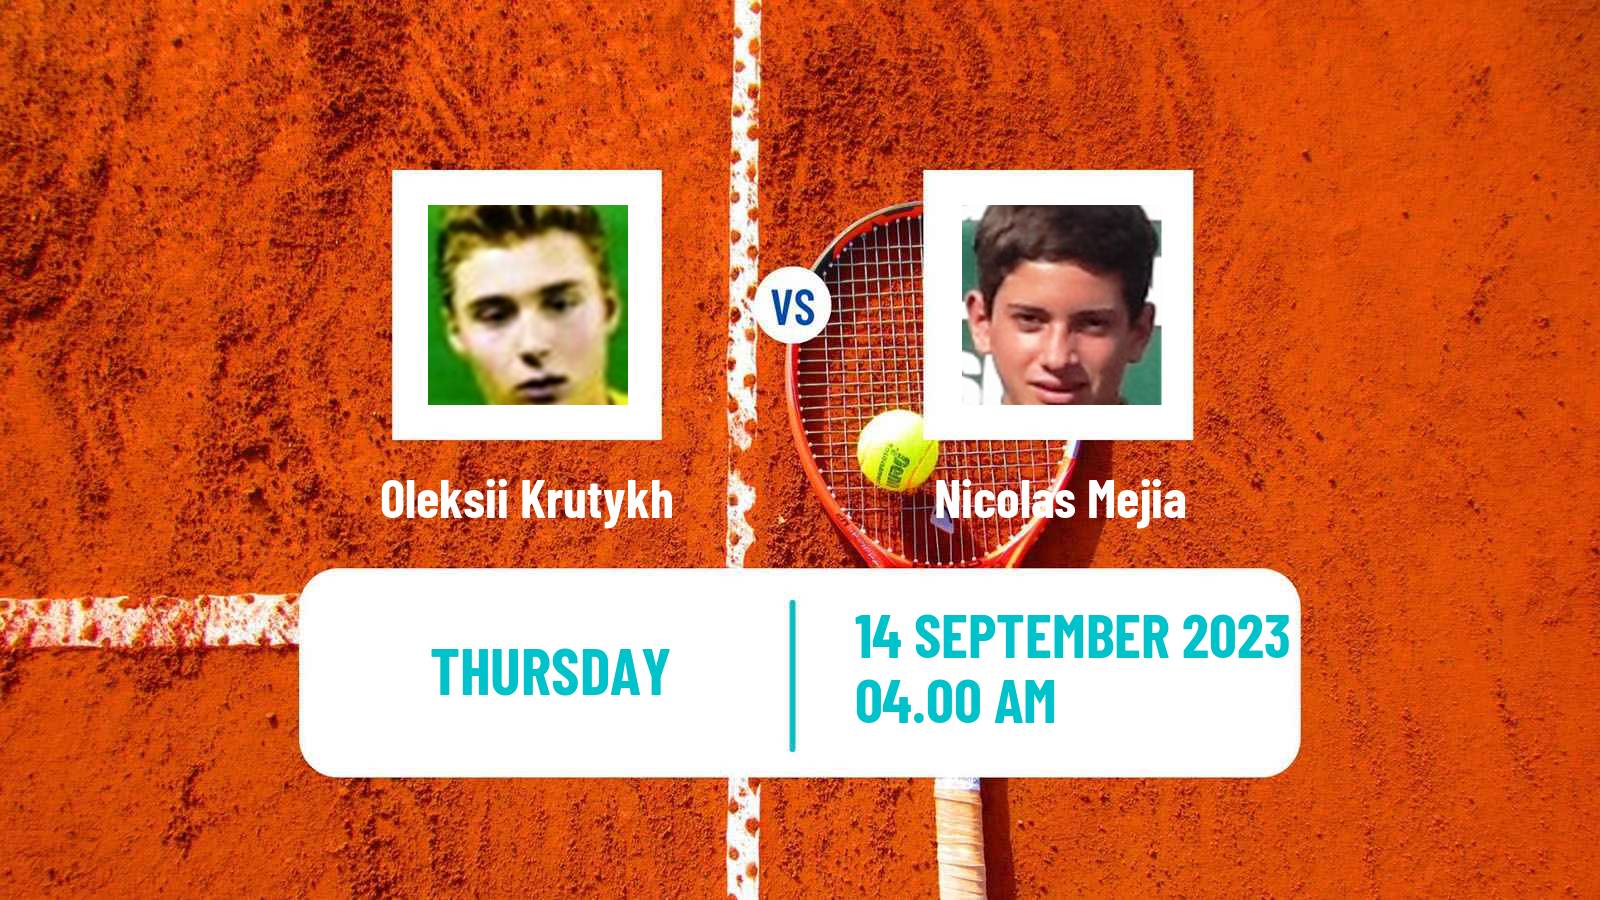 Tennis Davis Cup World Group I Oleksii Krutykh - Nicolas Mejia